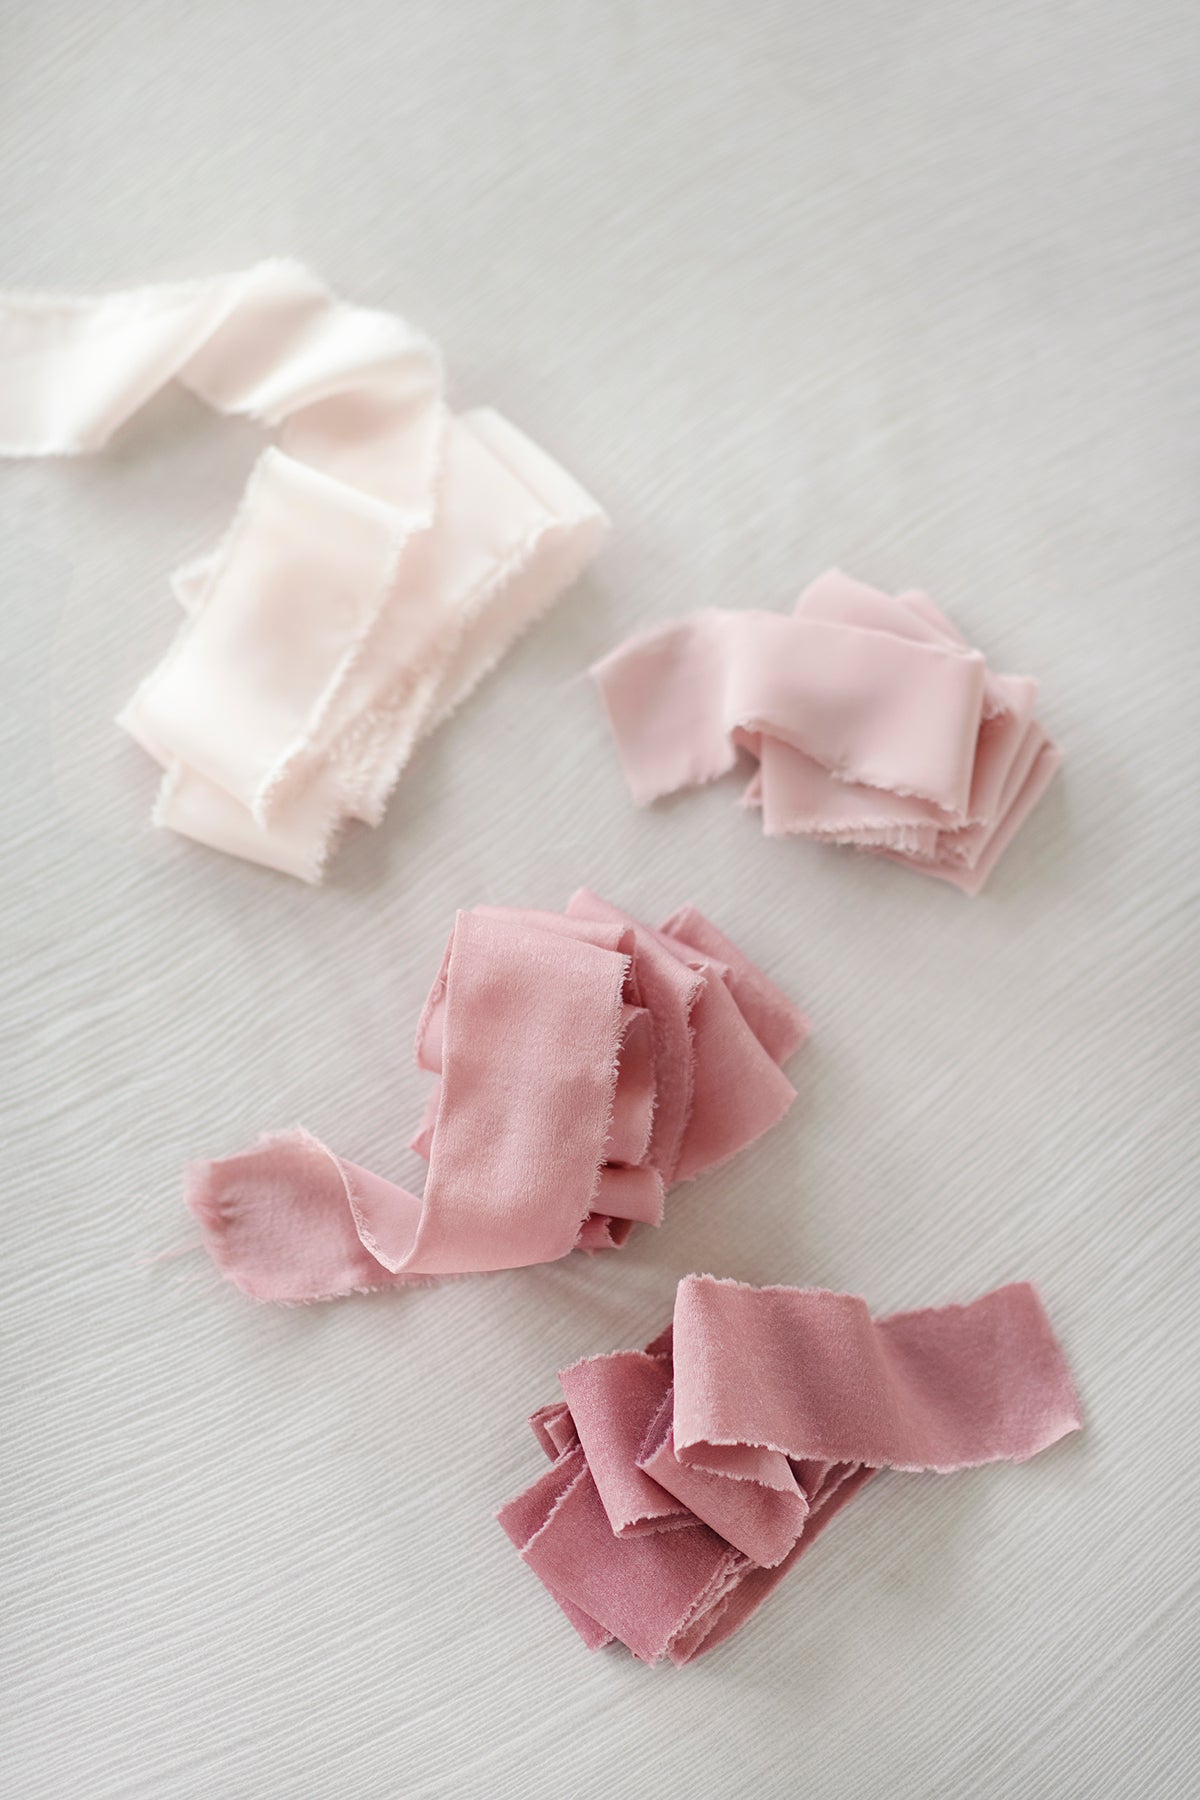 Dusty Rose Silk Satin Ribbon - 100% silk - Sew Vintagely